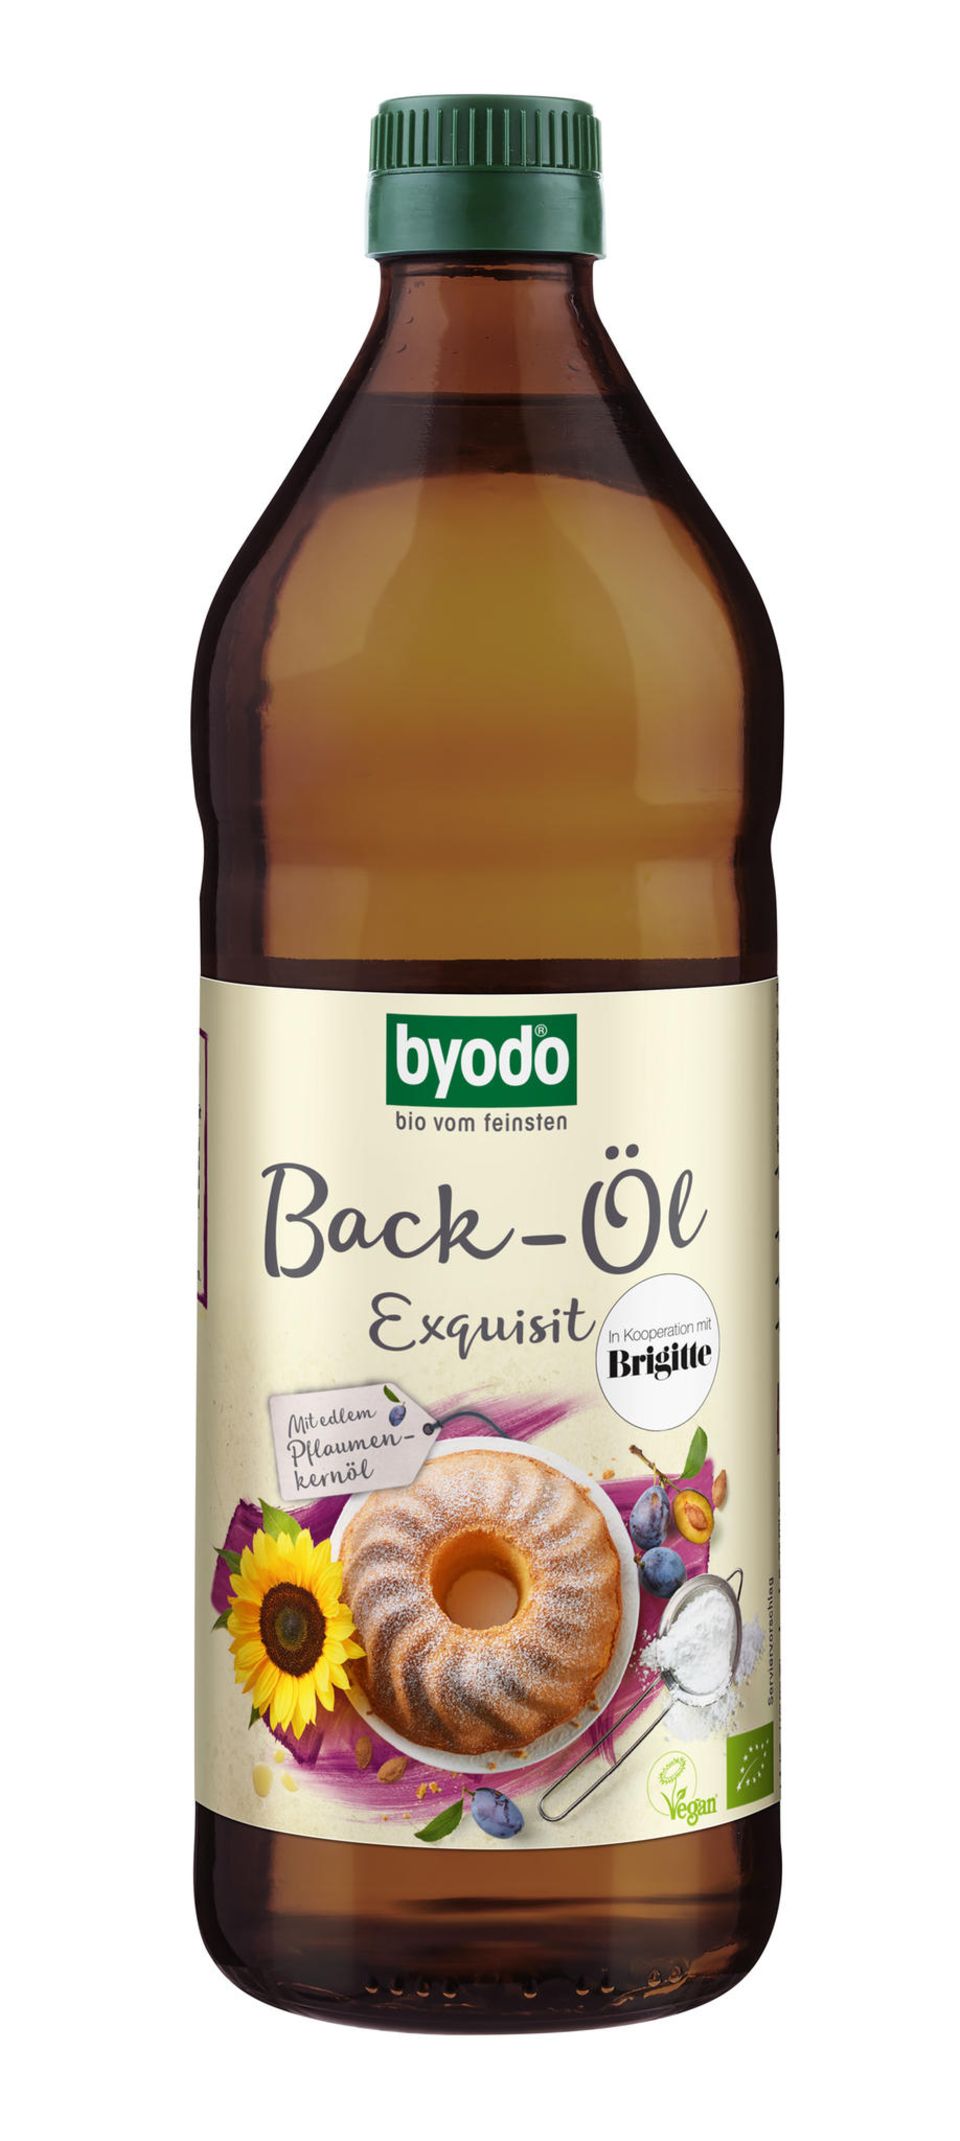 Food News: Byodo Back-Öl Exquisit